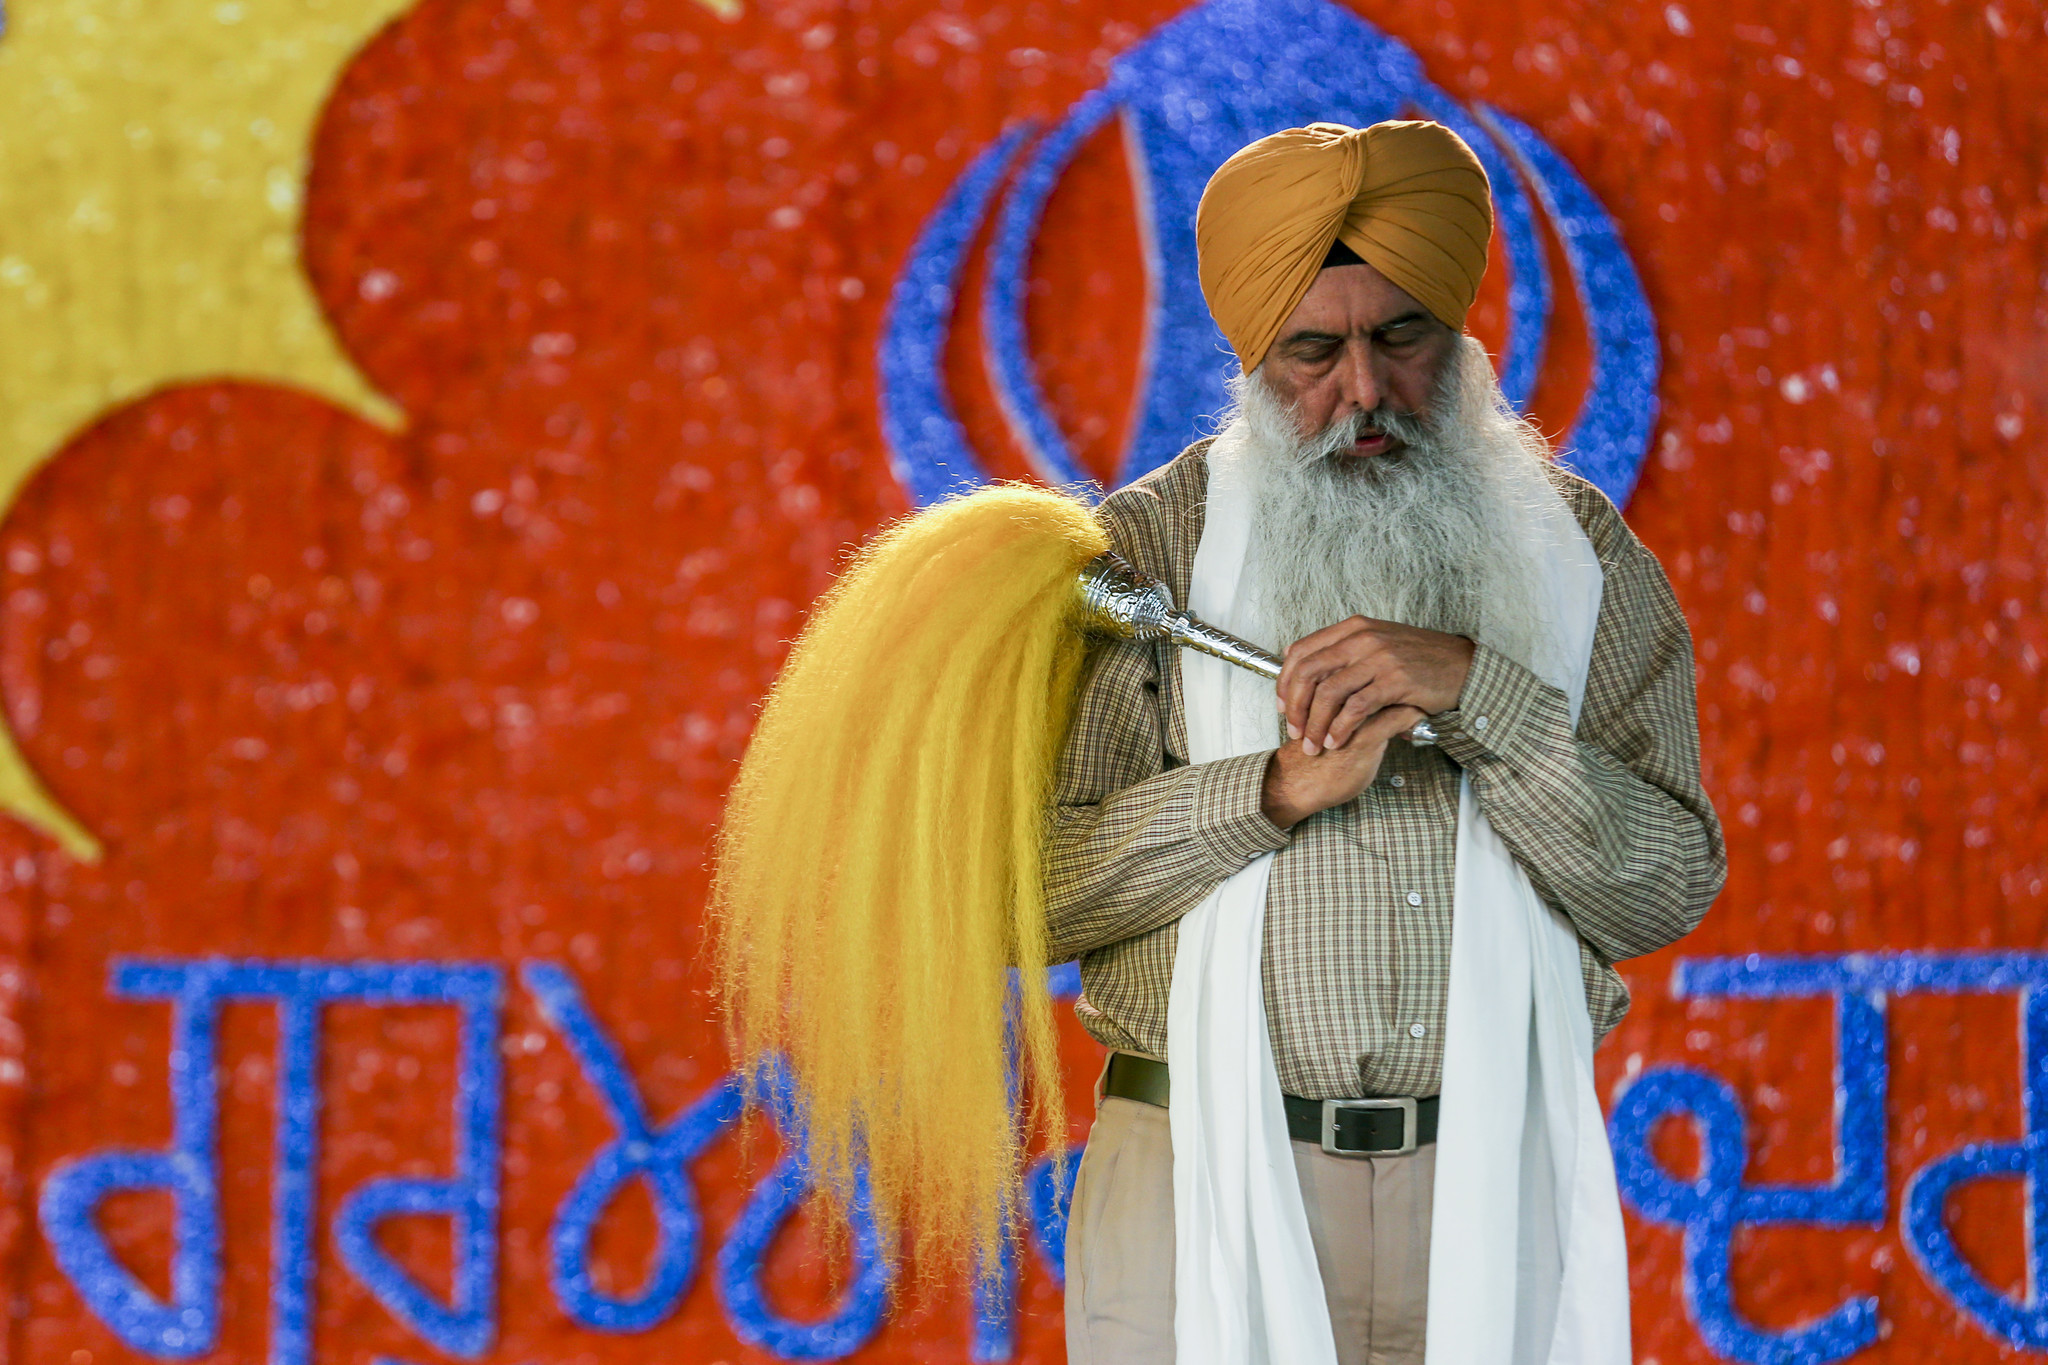 A Sikh priest offer prayers during Nagar Kirtan services at Gurdwara Guru Angad Darbar in Bakersfield.